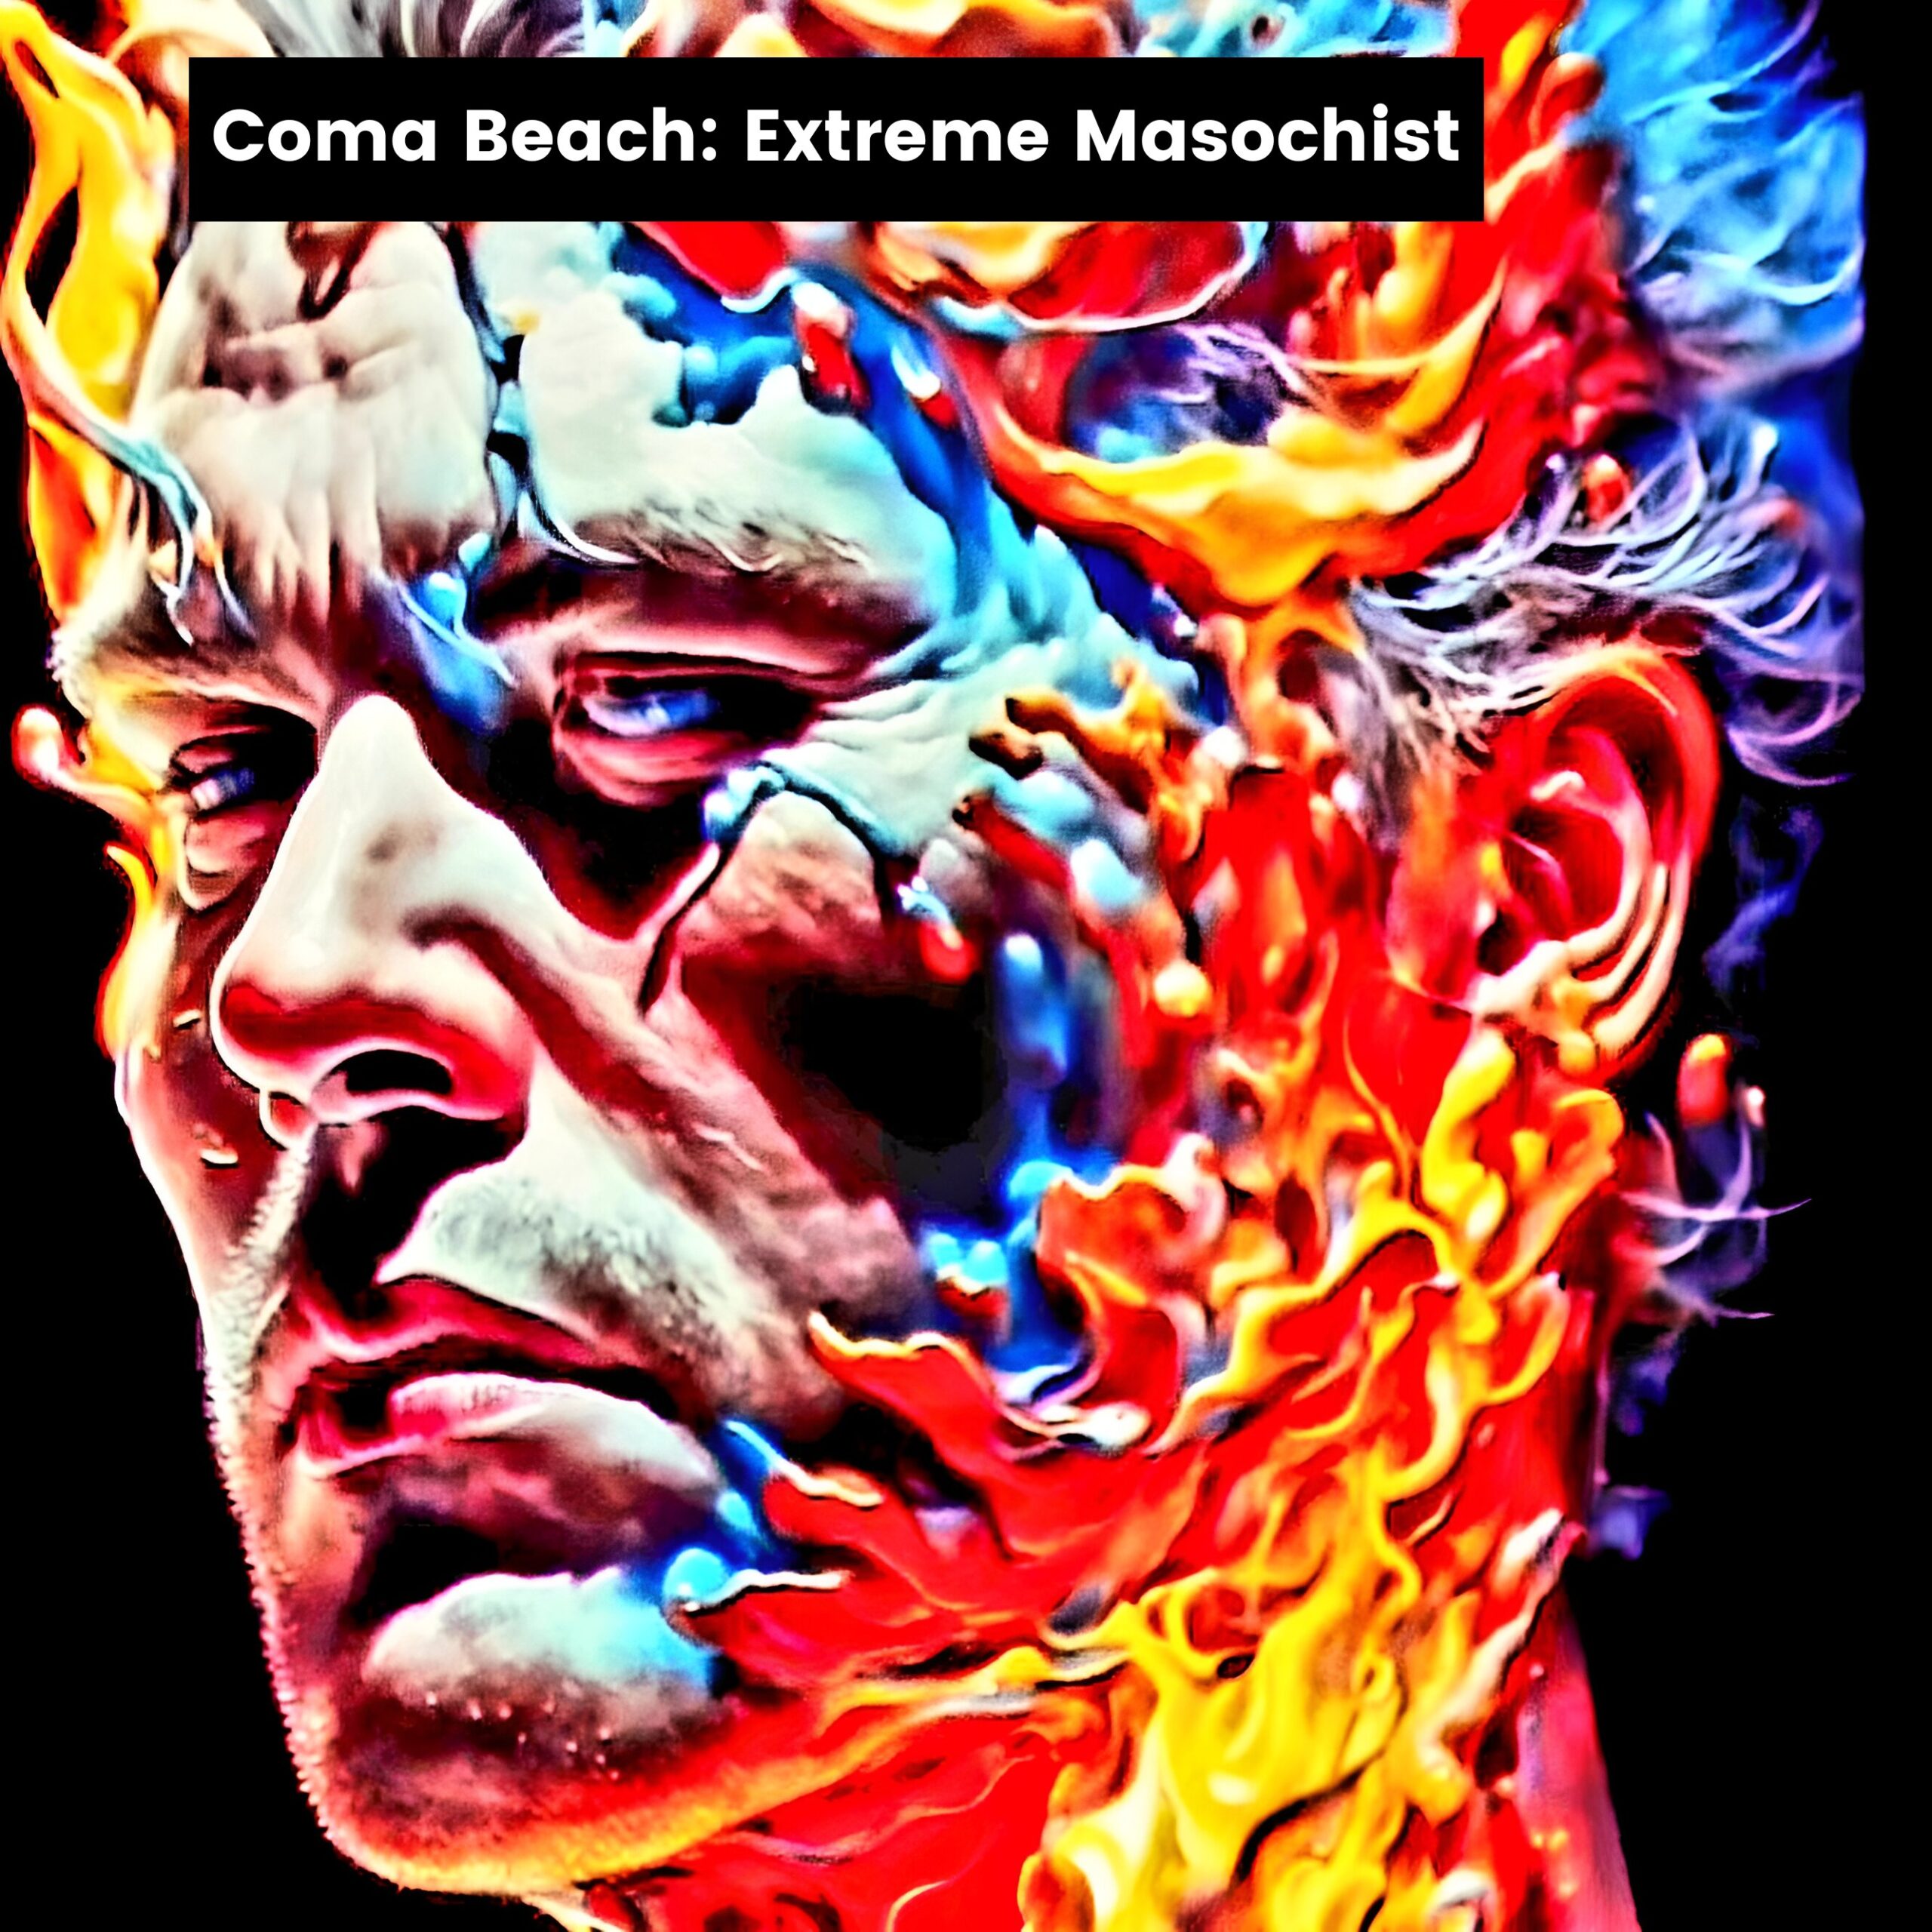 Coma Beach’s “Extreme Masochist”: A Harrowing Journey Through Emotional Turmoil